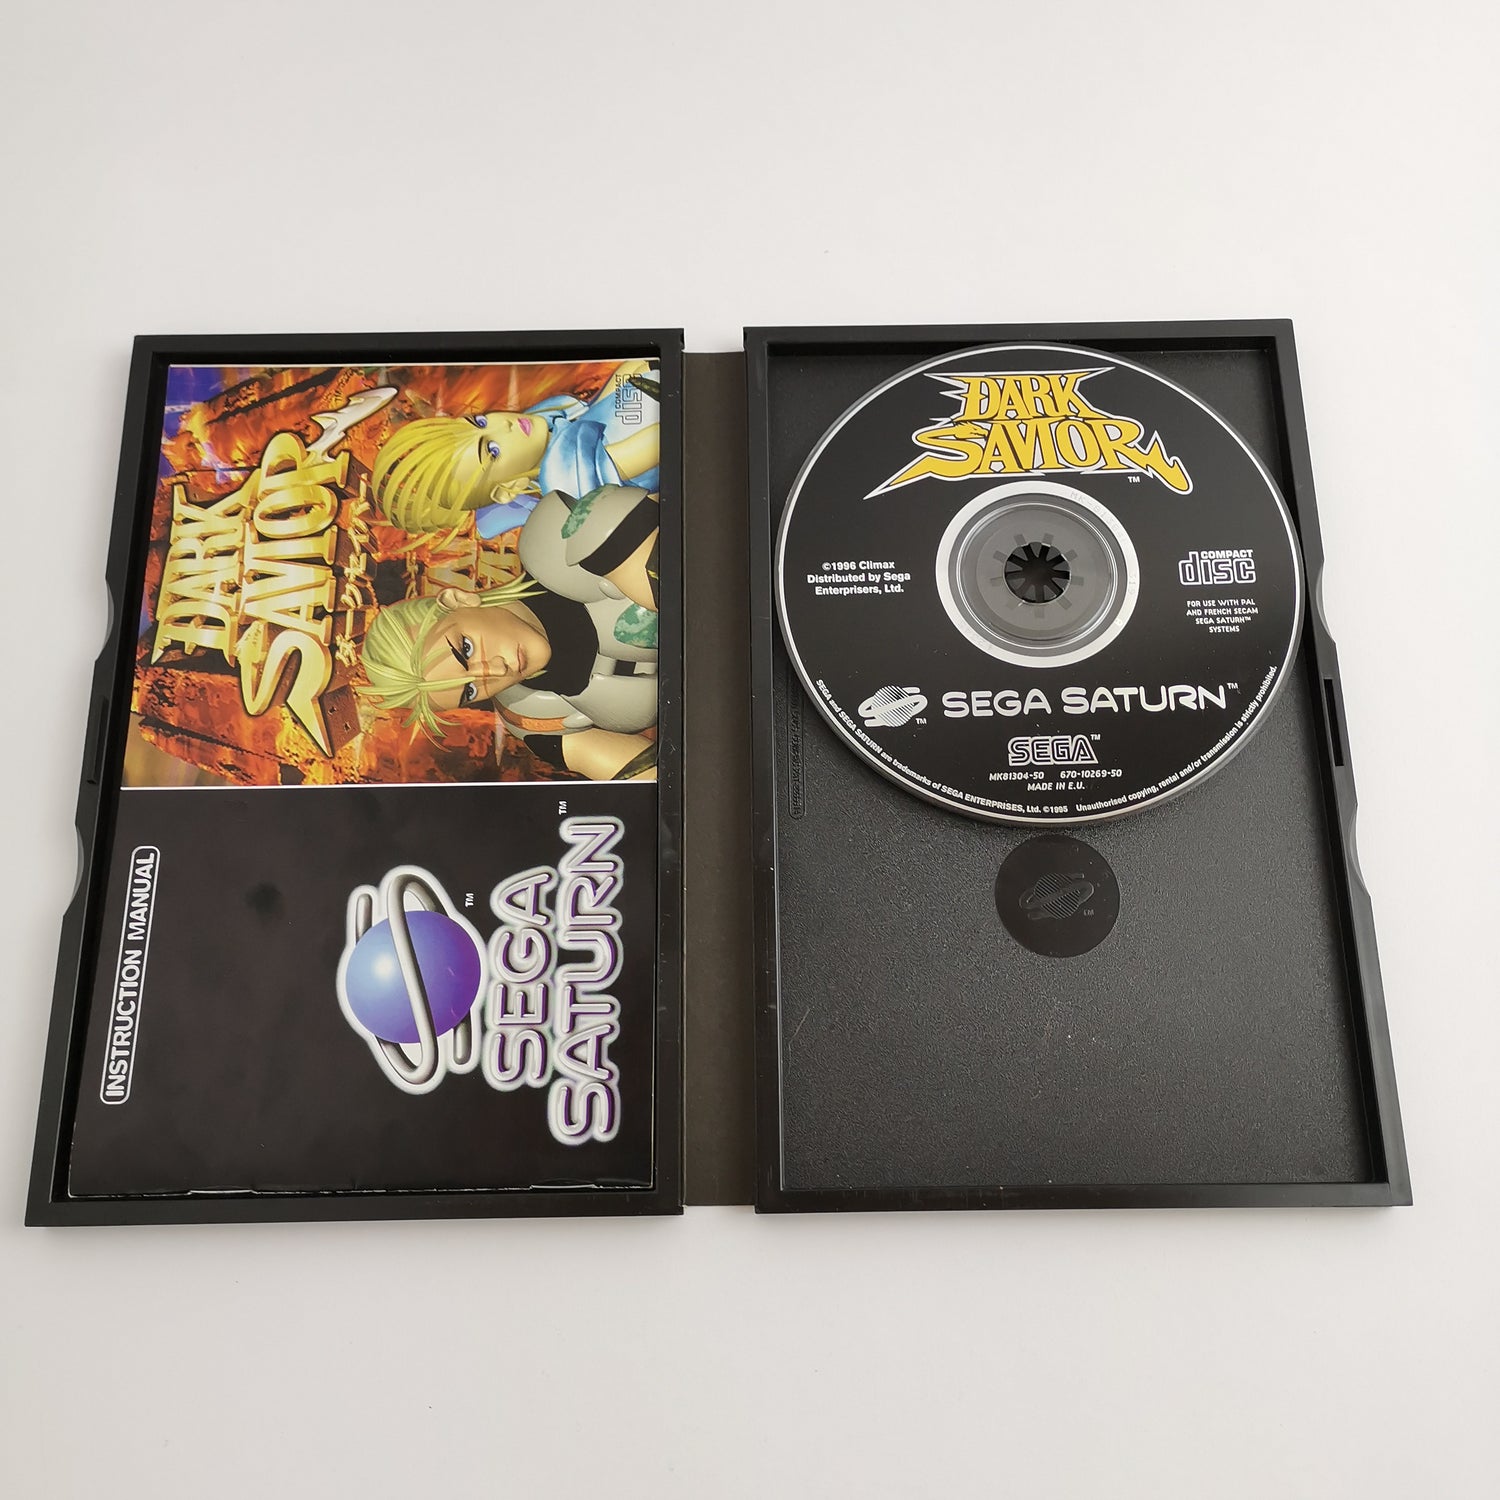 Sega Saturn Game: Dark Savior - Original Packaging & Instructions | PAL version [1]